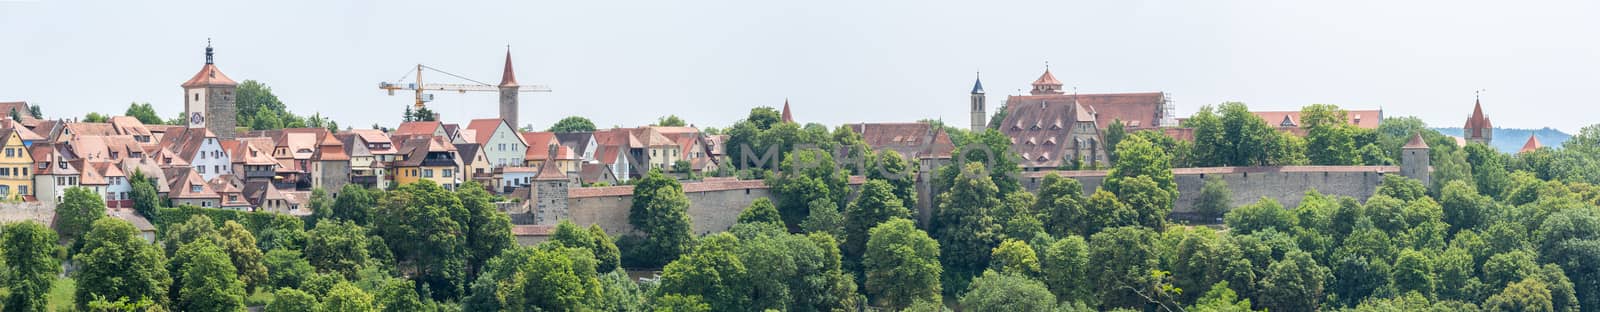 Panorama Rothenburg ob der Tauber historic town downtown, Franconia, Bavaria, Germany